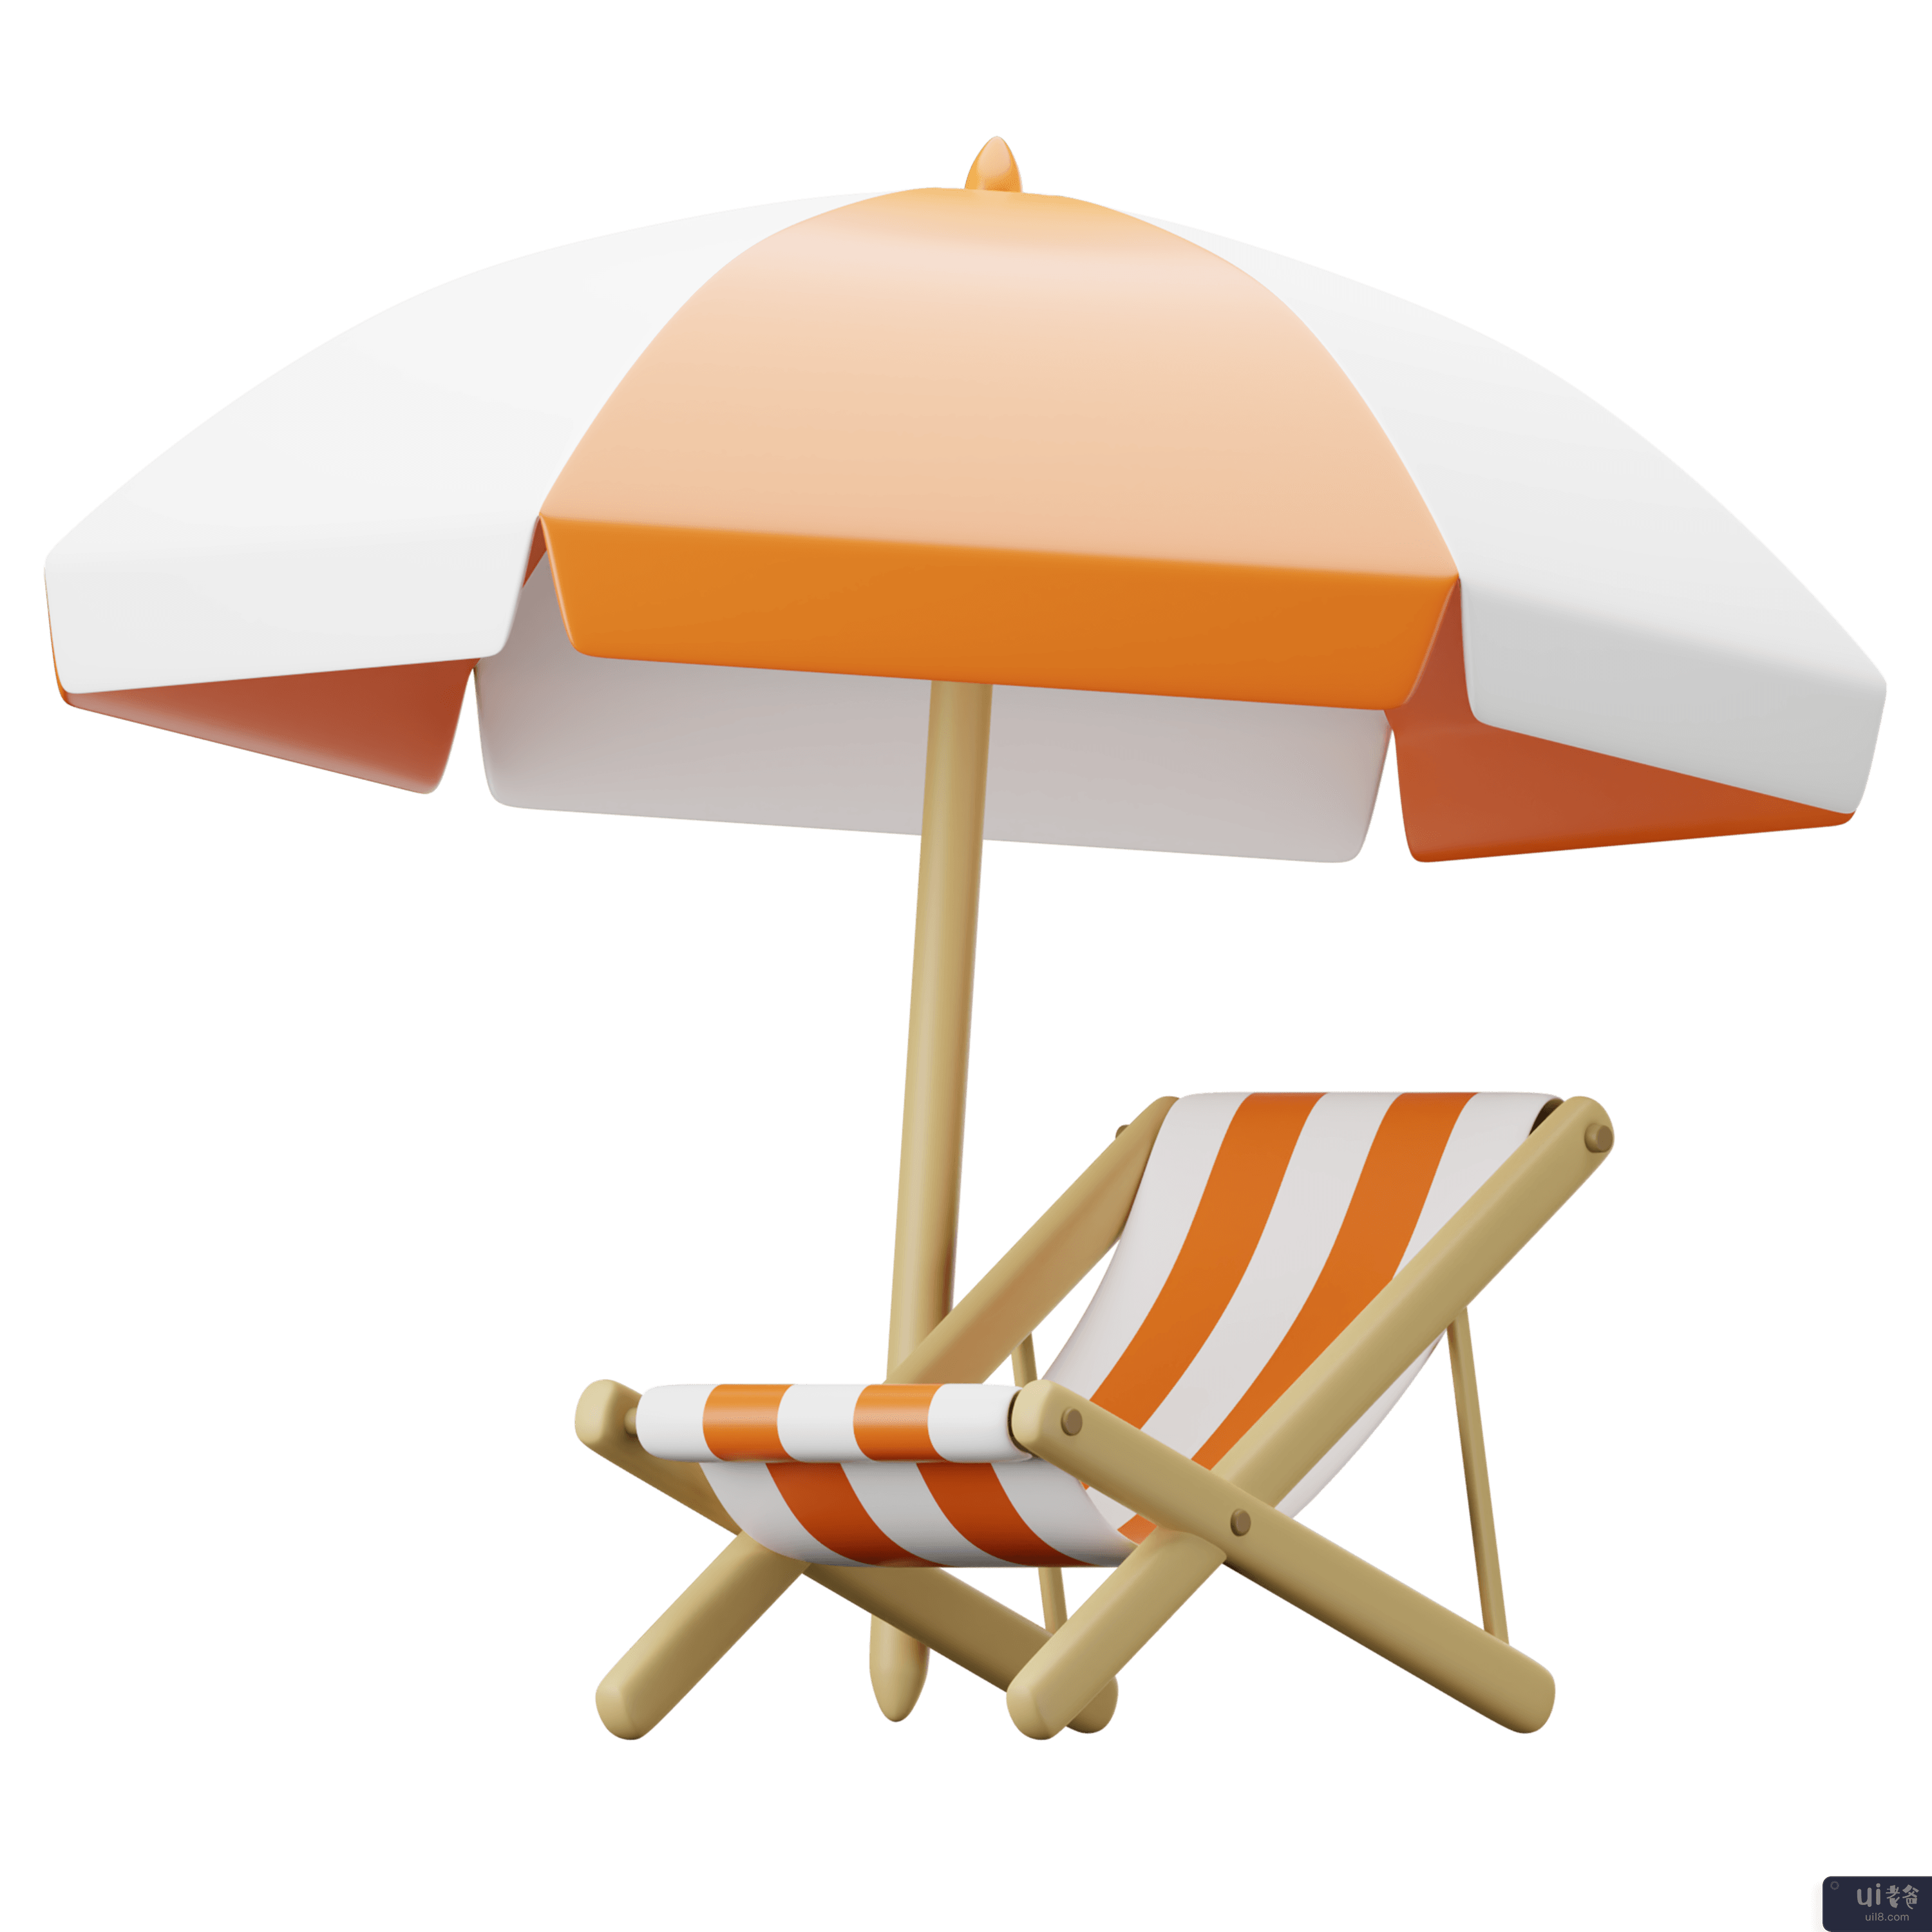 3D 旅行和假期插图包 - 伞海滩(3D Travel and Holidays Illustration Pack - Umbrella Beach)插图